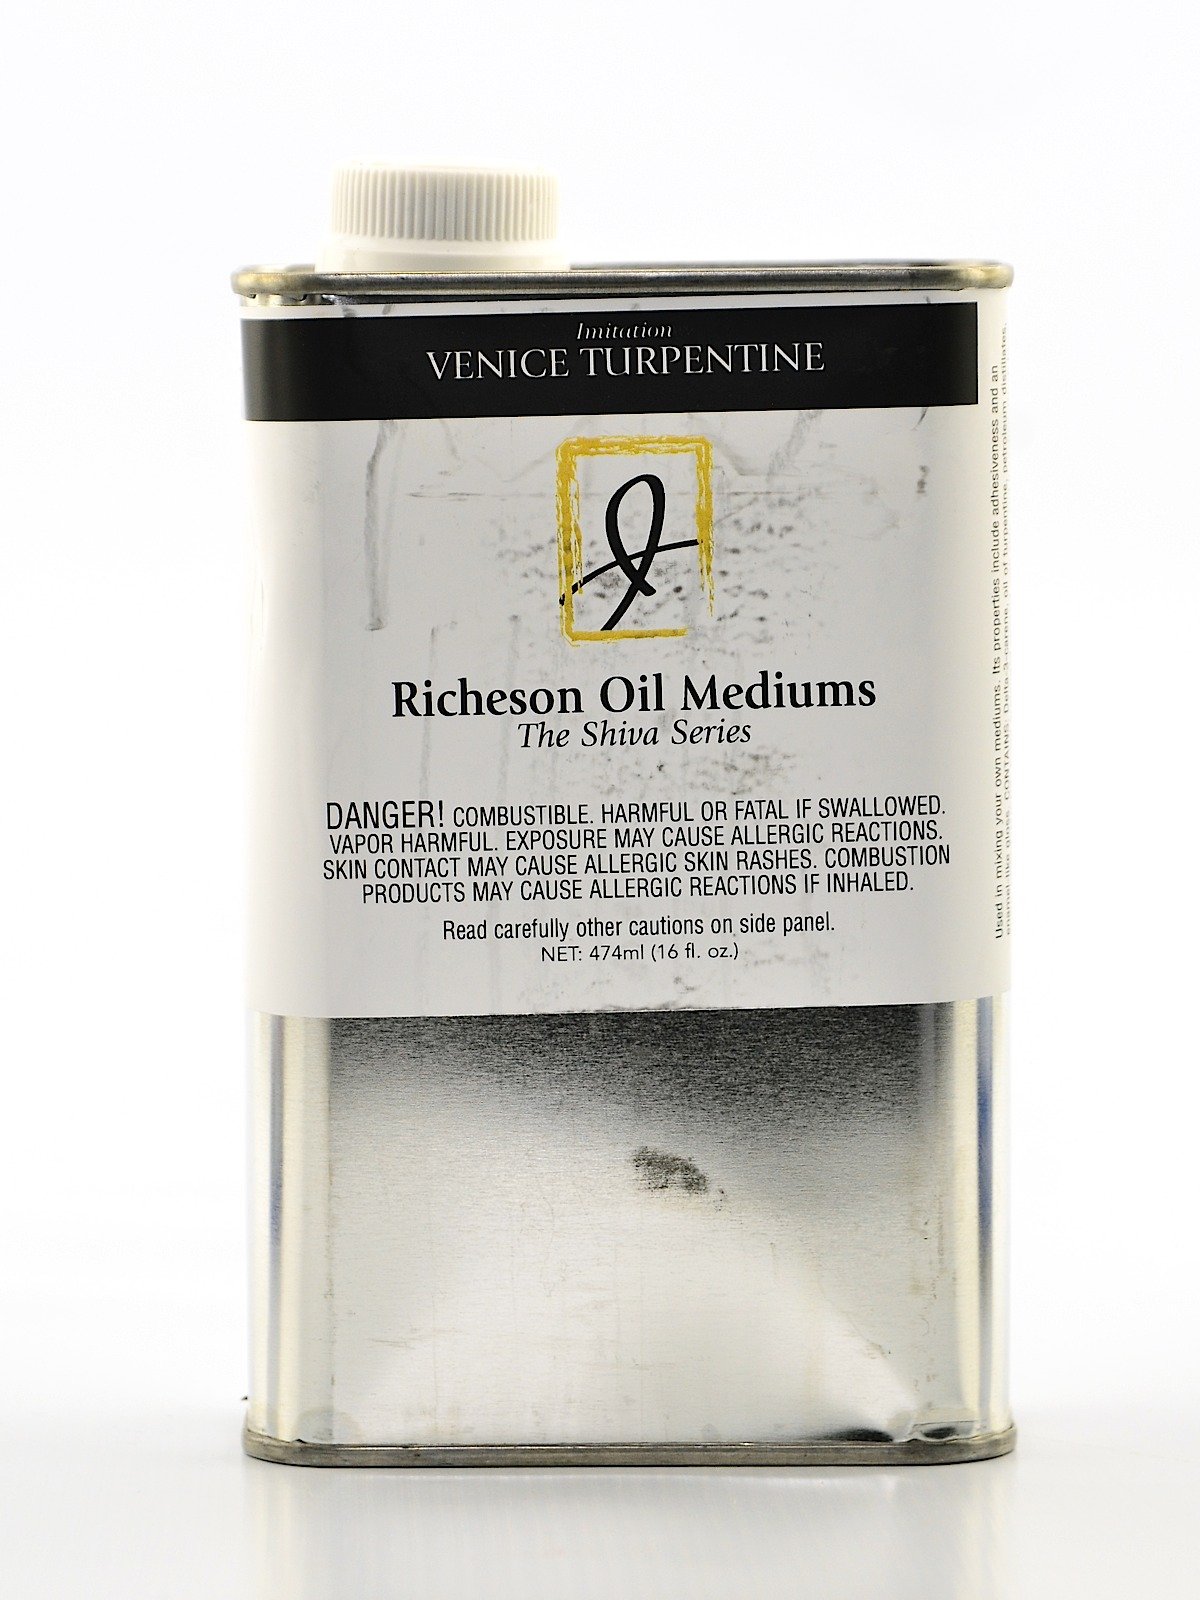 Jack Richeson Richeson Oil Mediums Venice Turpentine